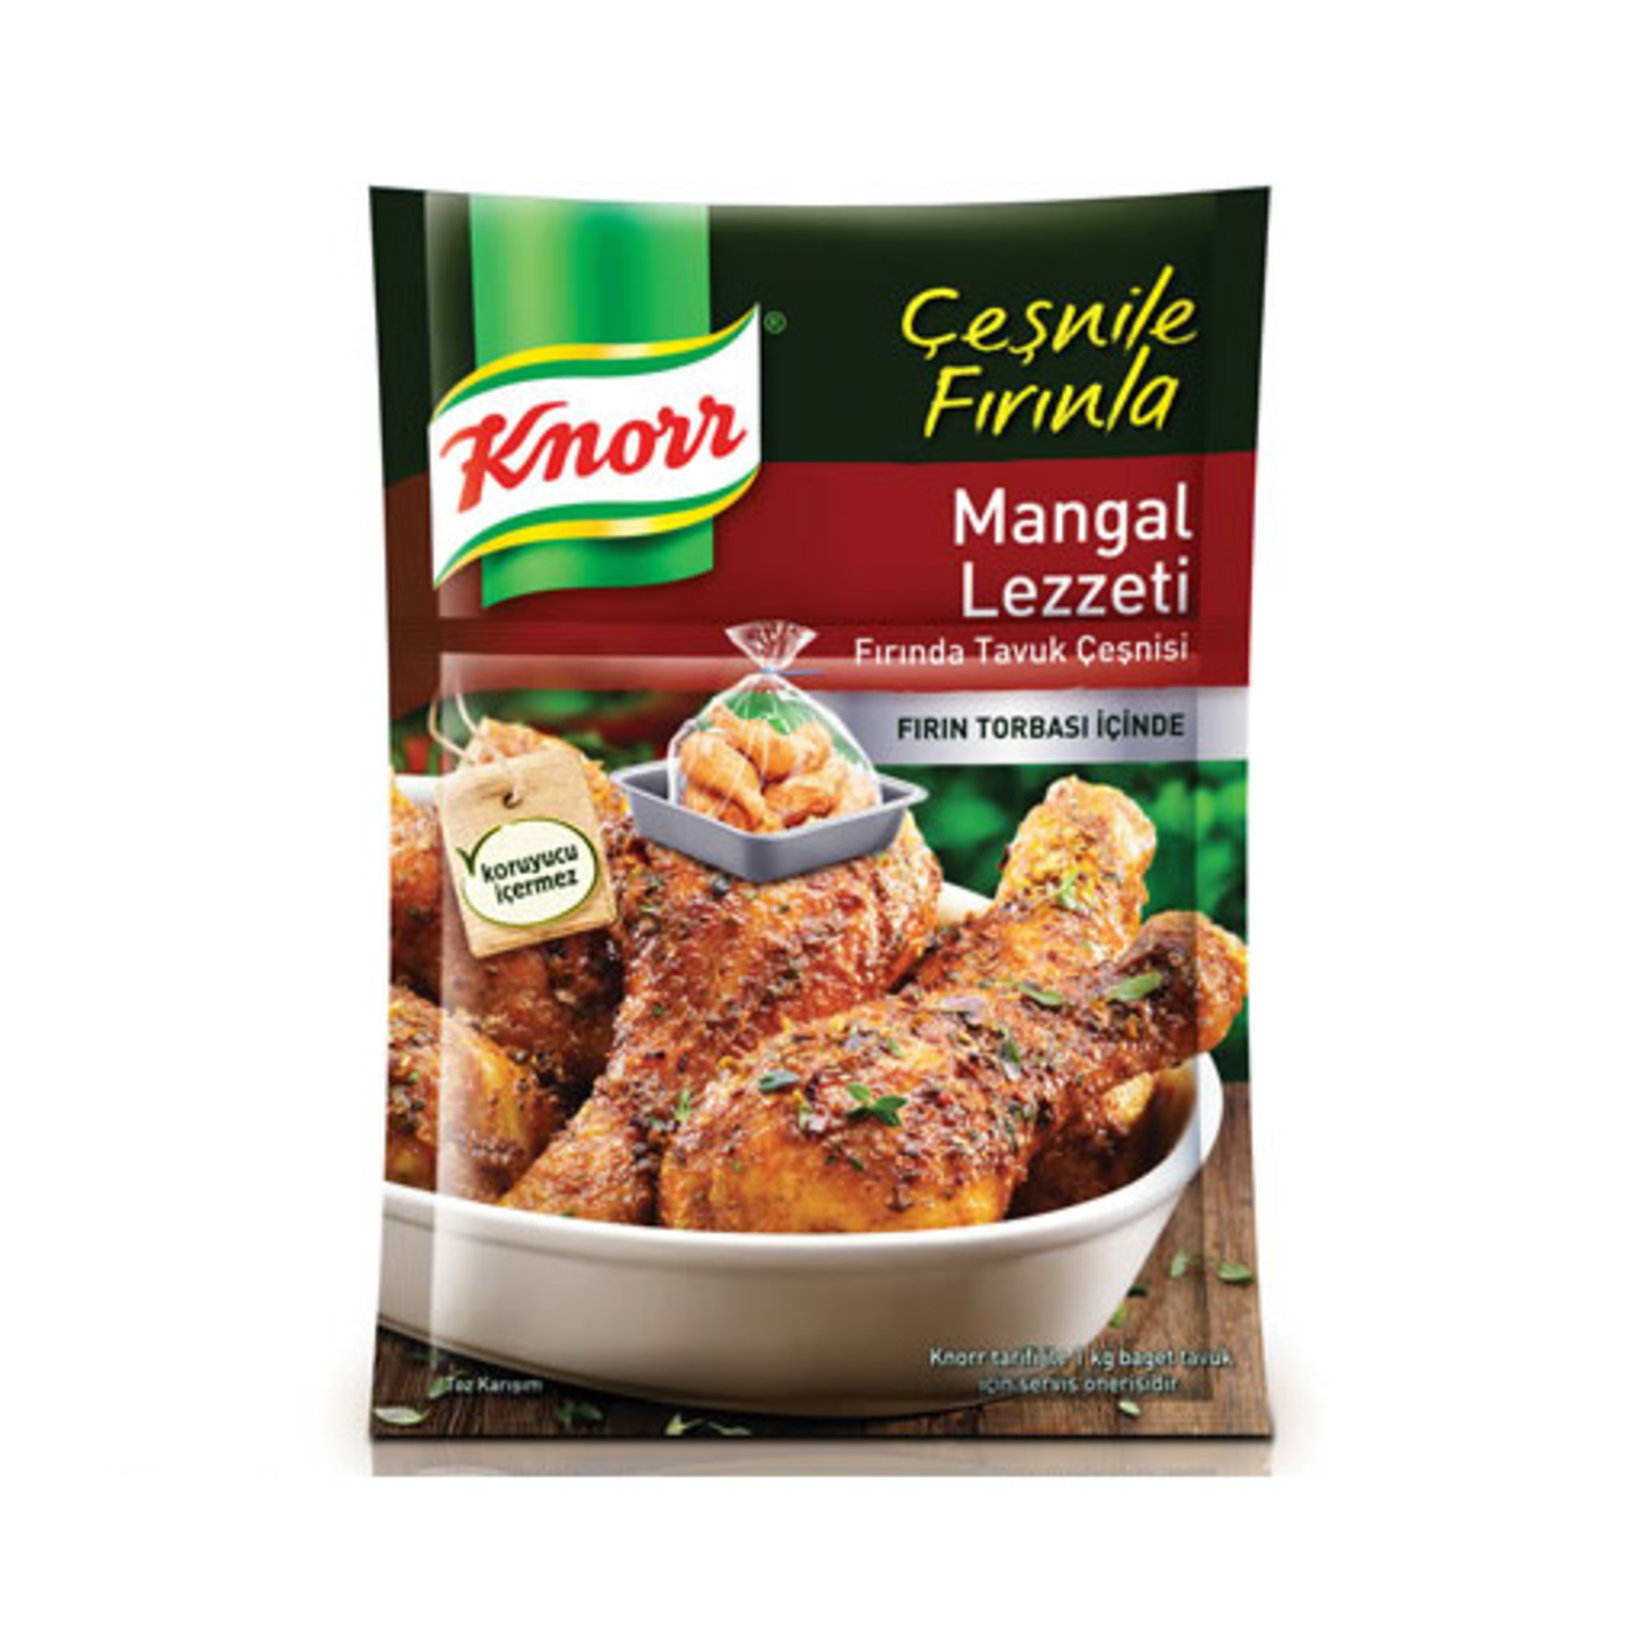 resm Knorr Fırında Tavuk Çeşnili Mangal Lezzeti 32 g